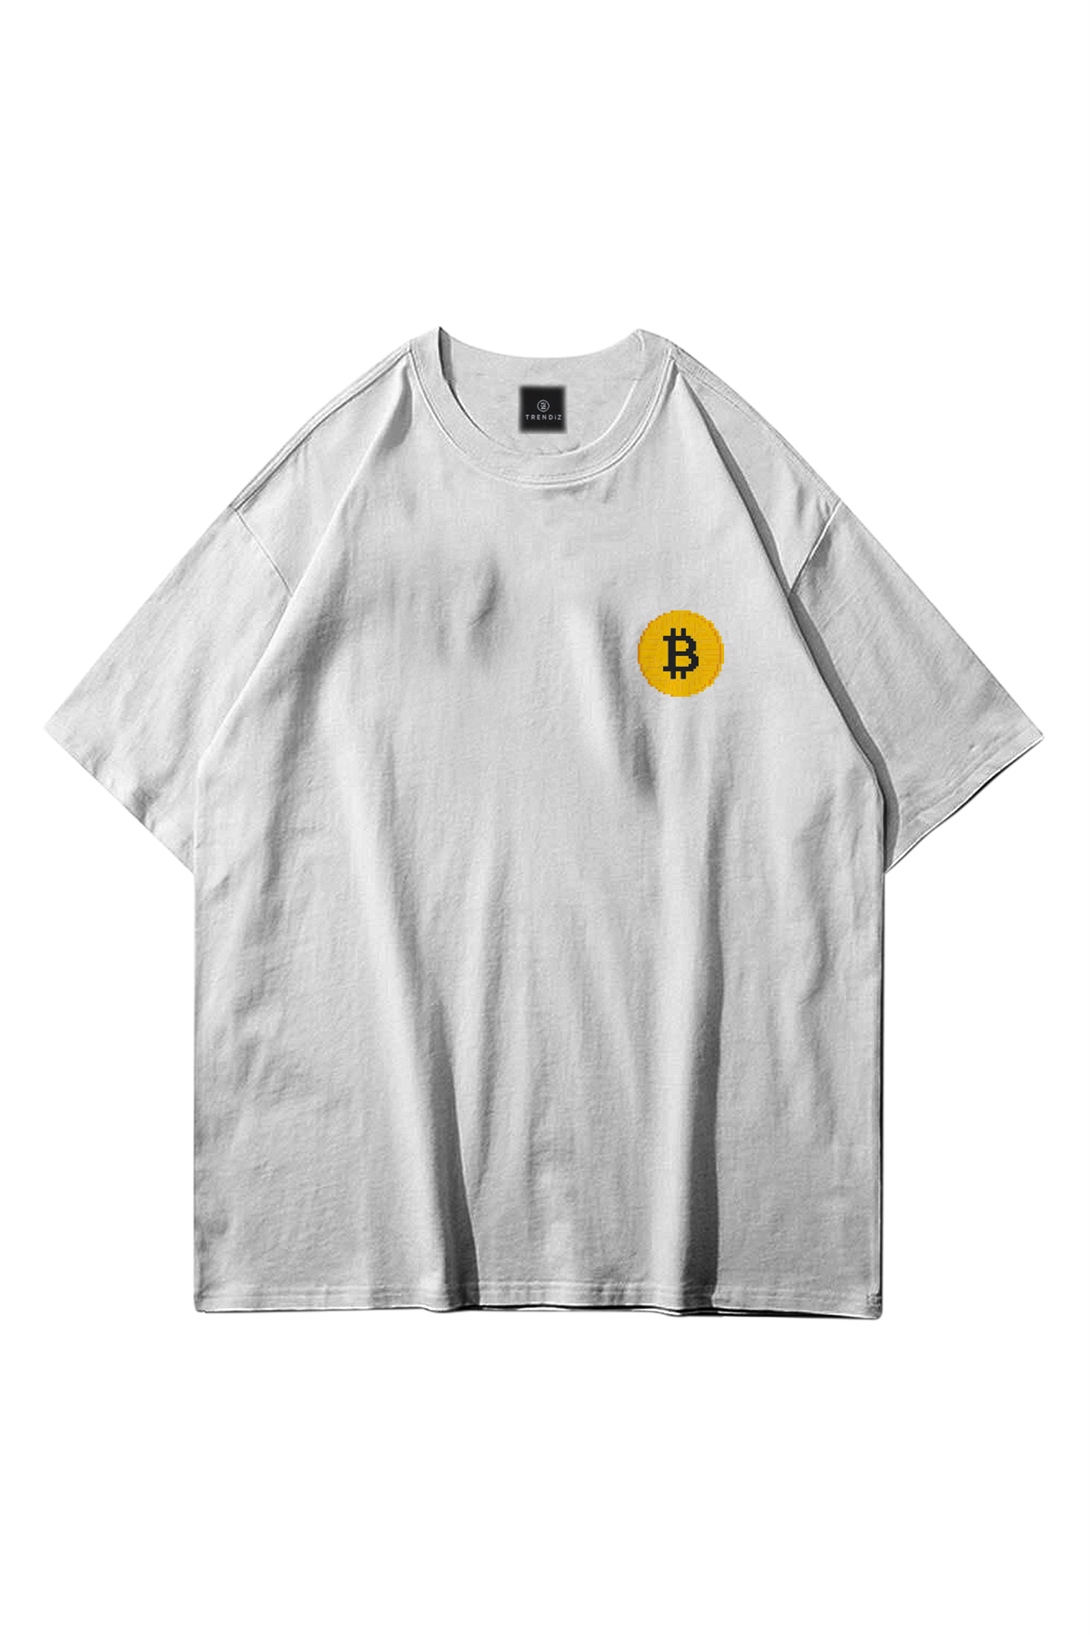 Trendiz Unisex Bitcoin Beyaz Tshirt